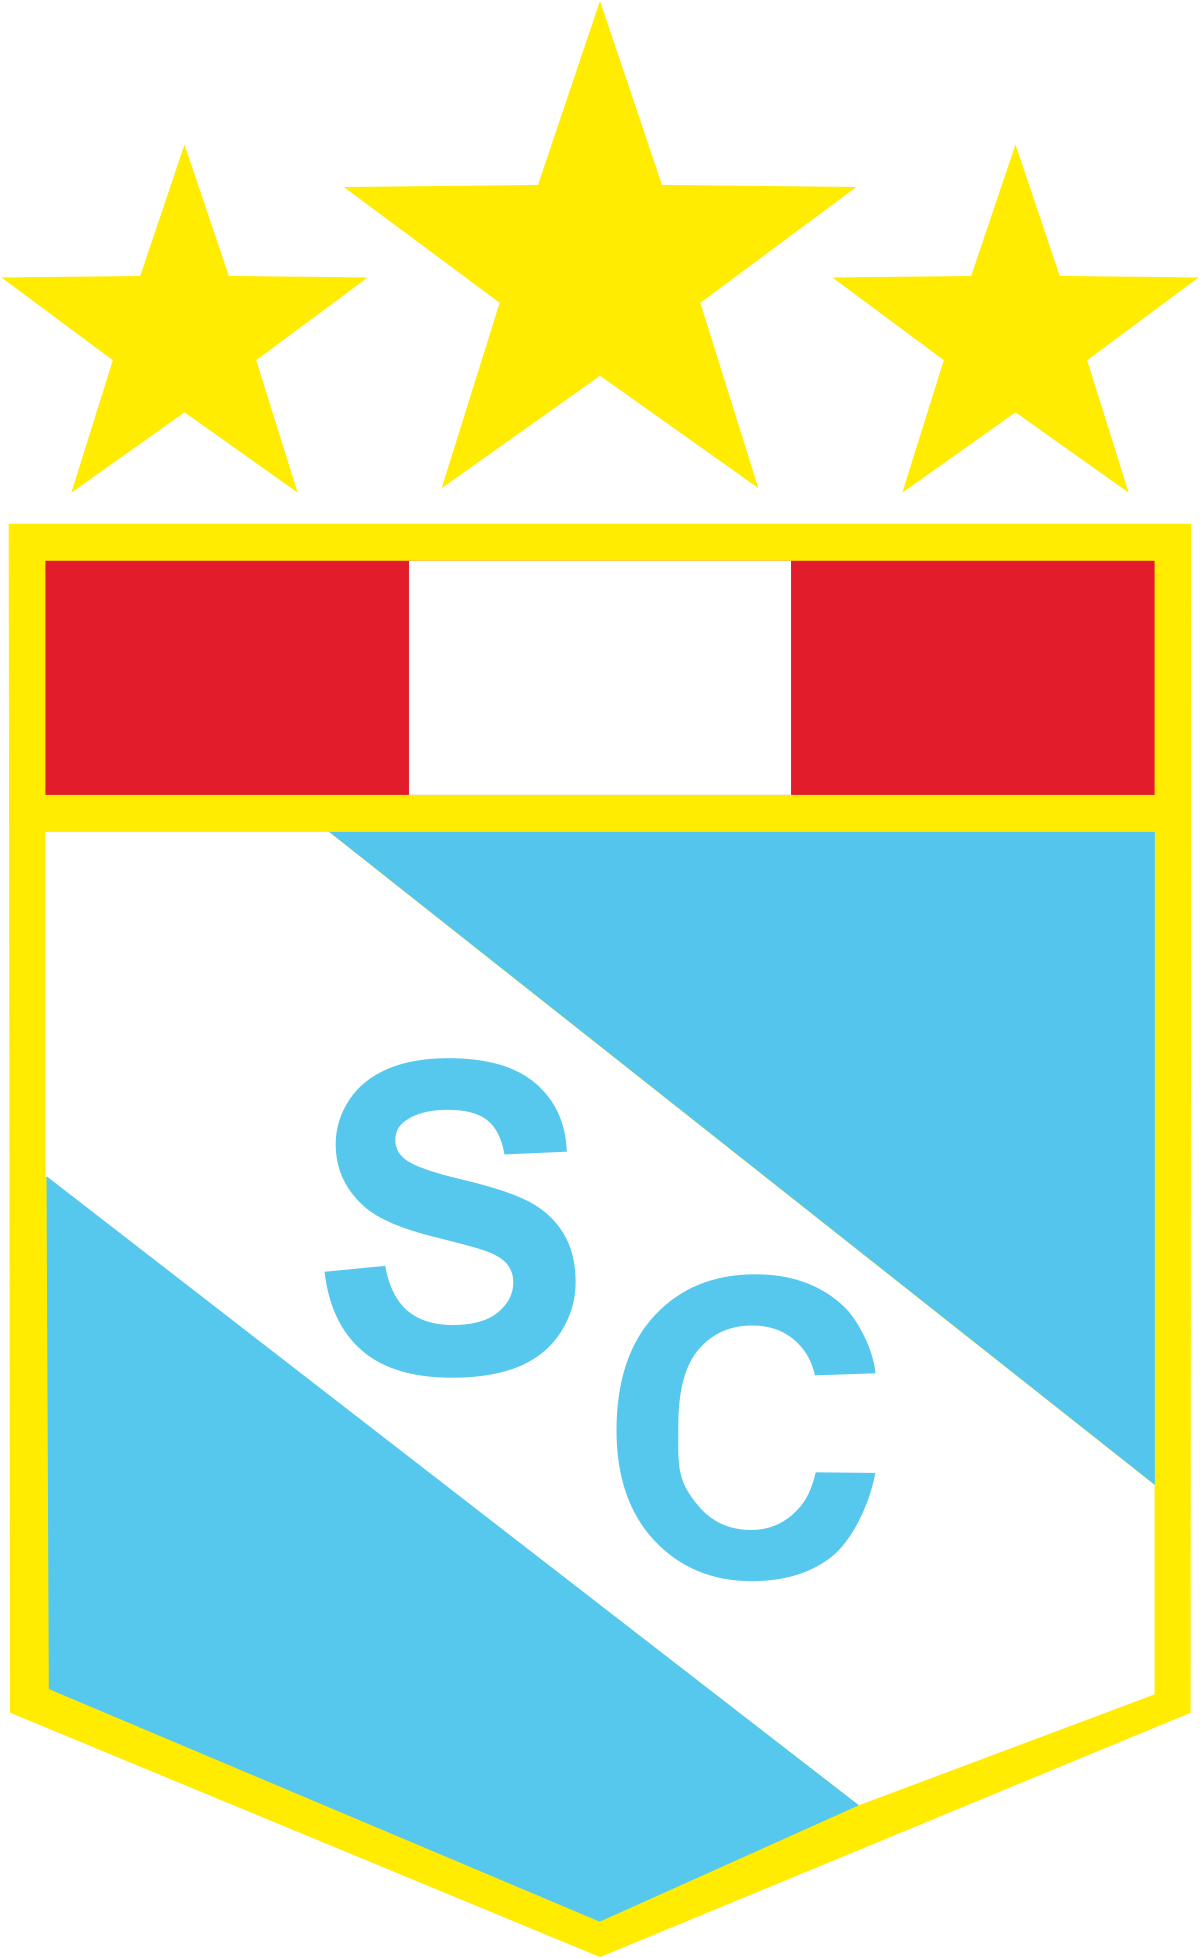 Sporting Cristal logo